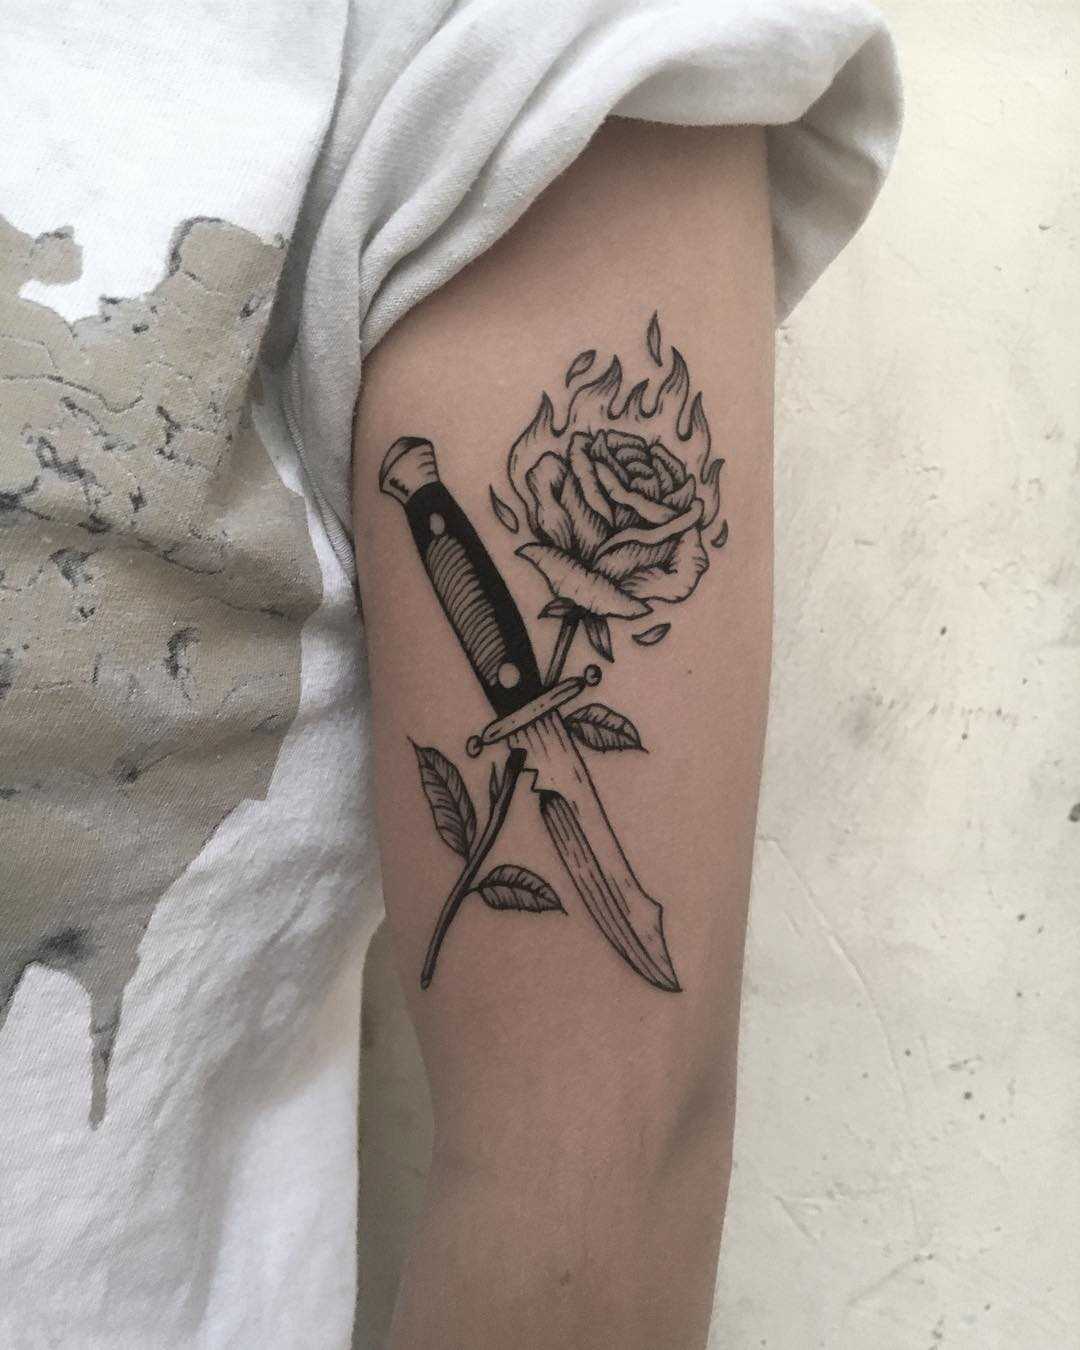 Knife and burning rose tattoo